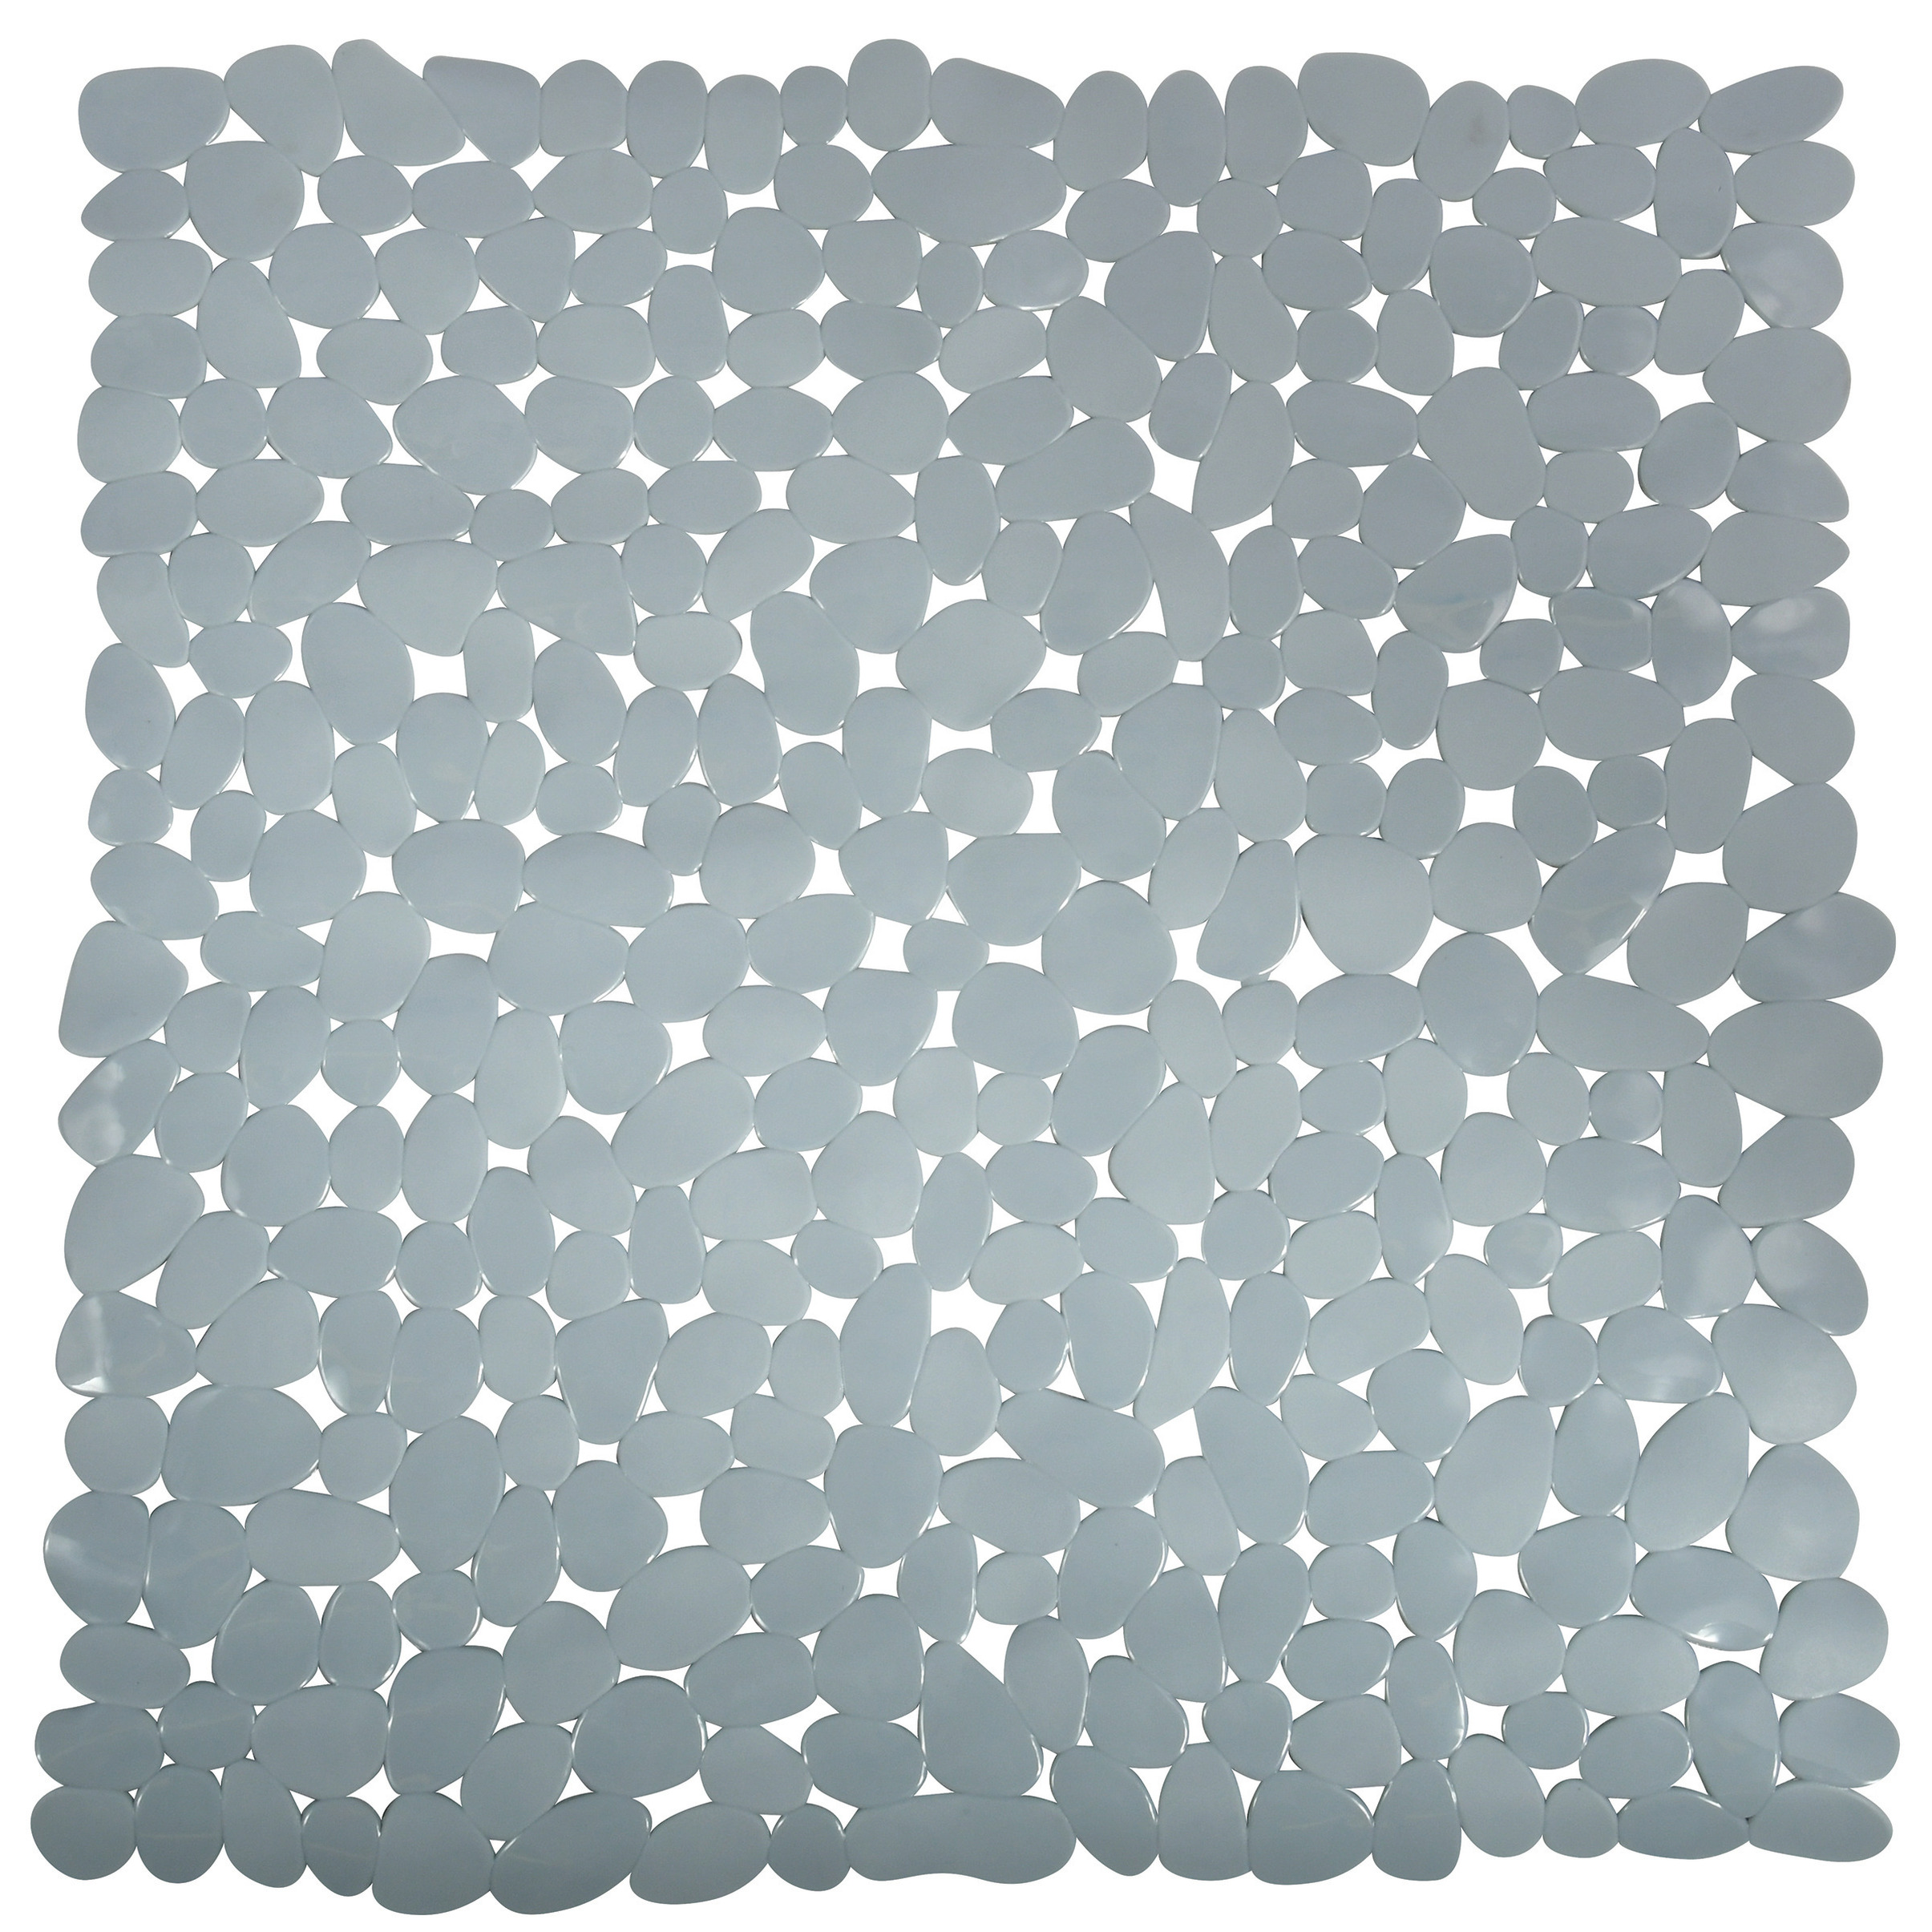 Douche-bad anti-slip mat badkamer pvc grijs 54 x 54 cm vierkant